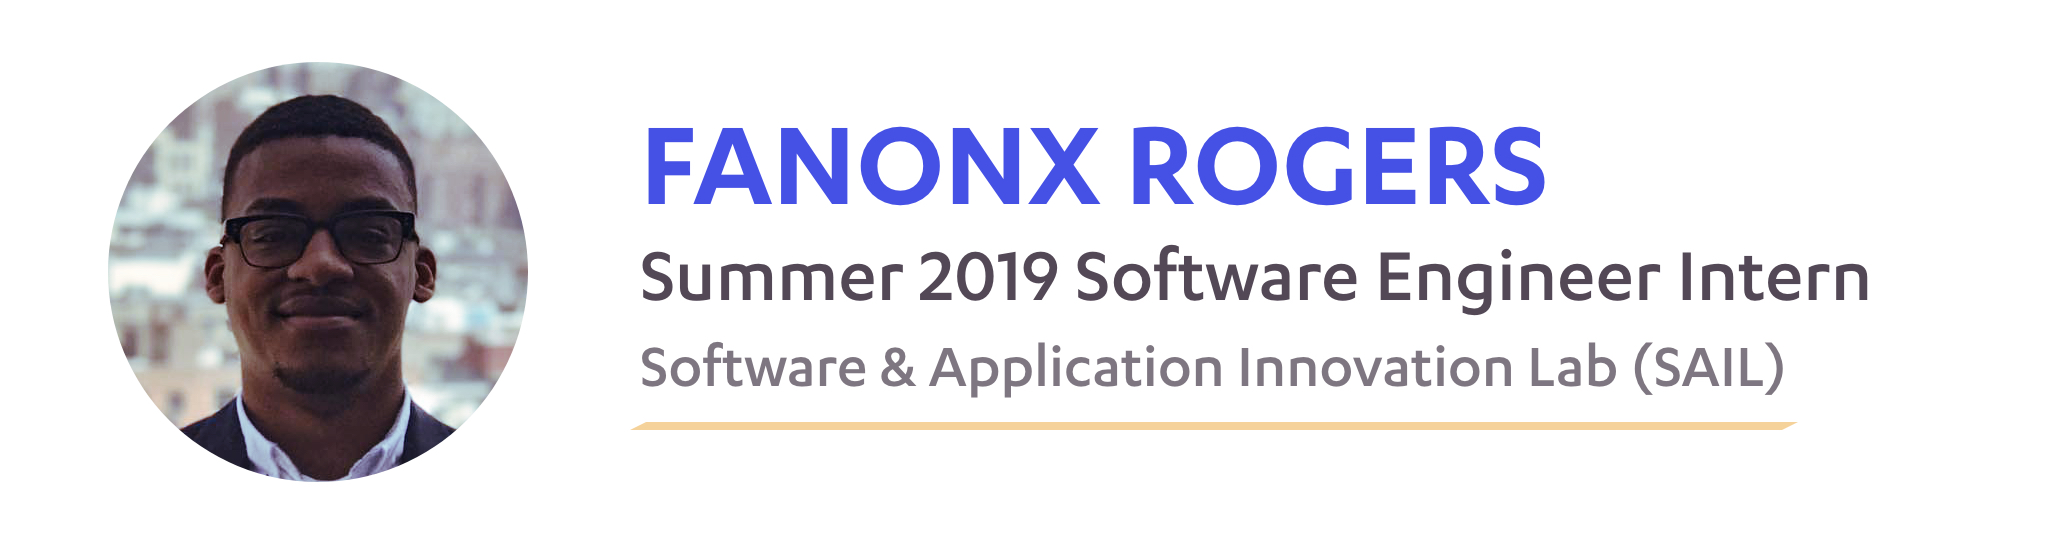 FanonX Rogers, SAIL Summer 2019 Software Engineer 